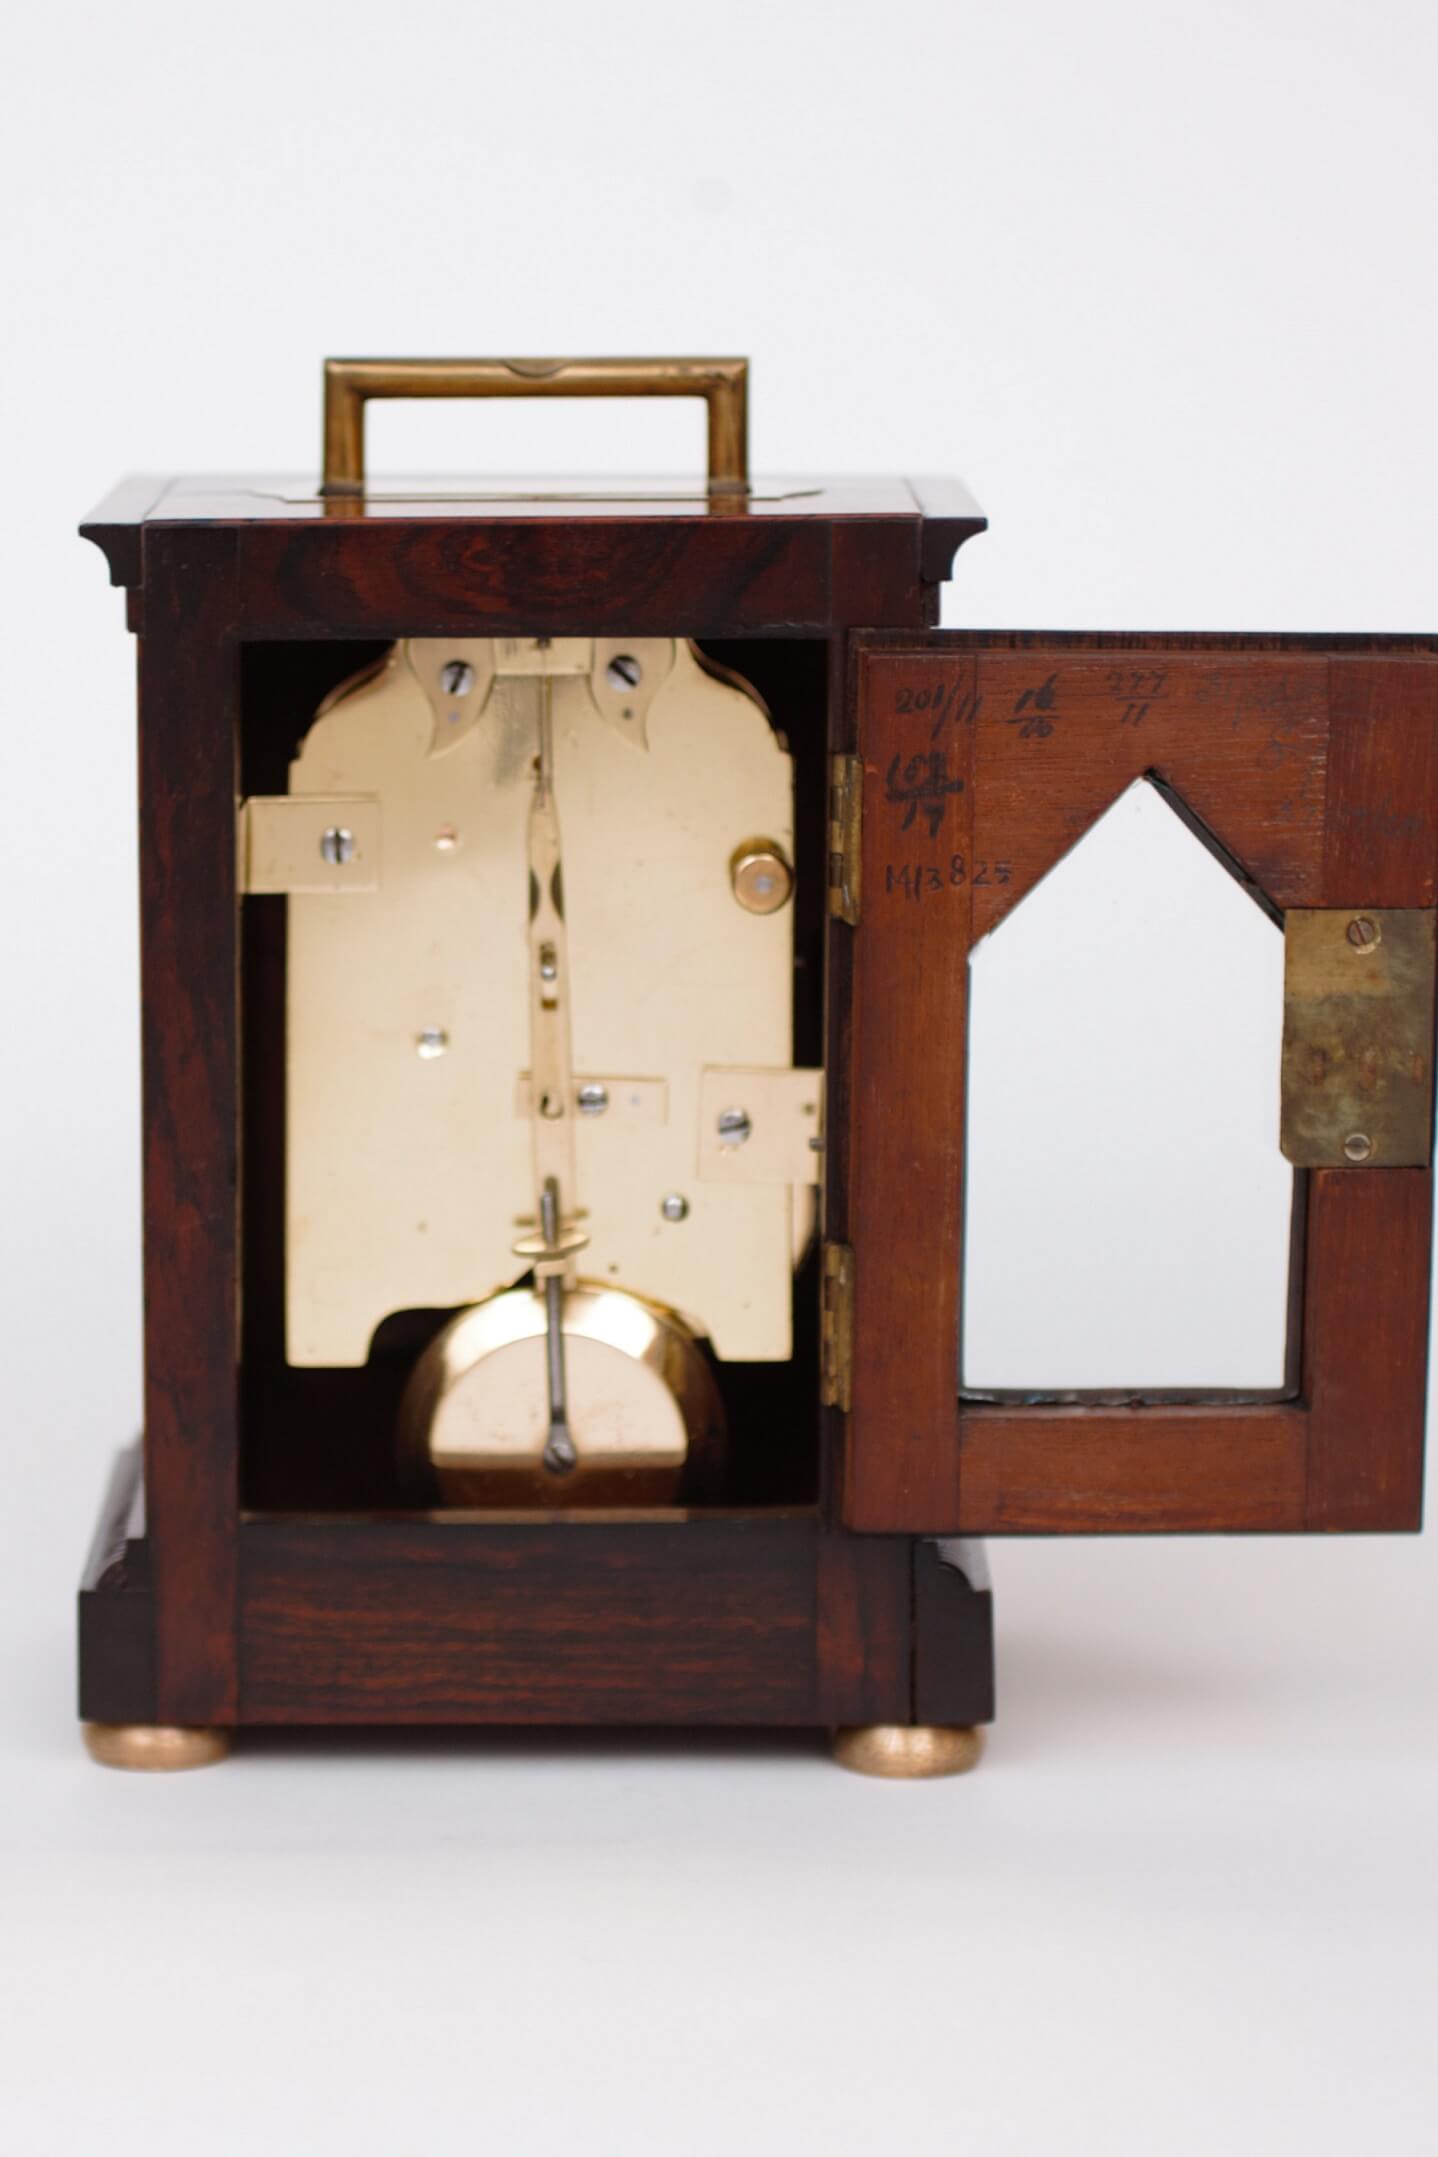 English-British-brass-rosewood-library-travel-antique-clock-timepiece-McCabe-London